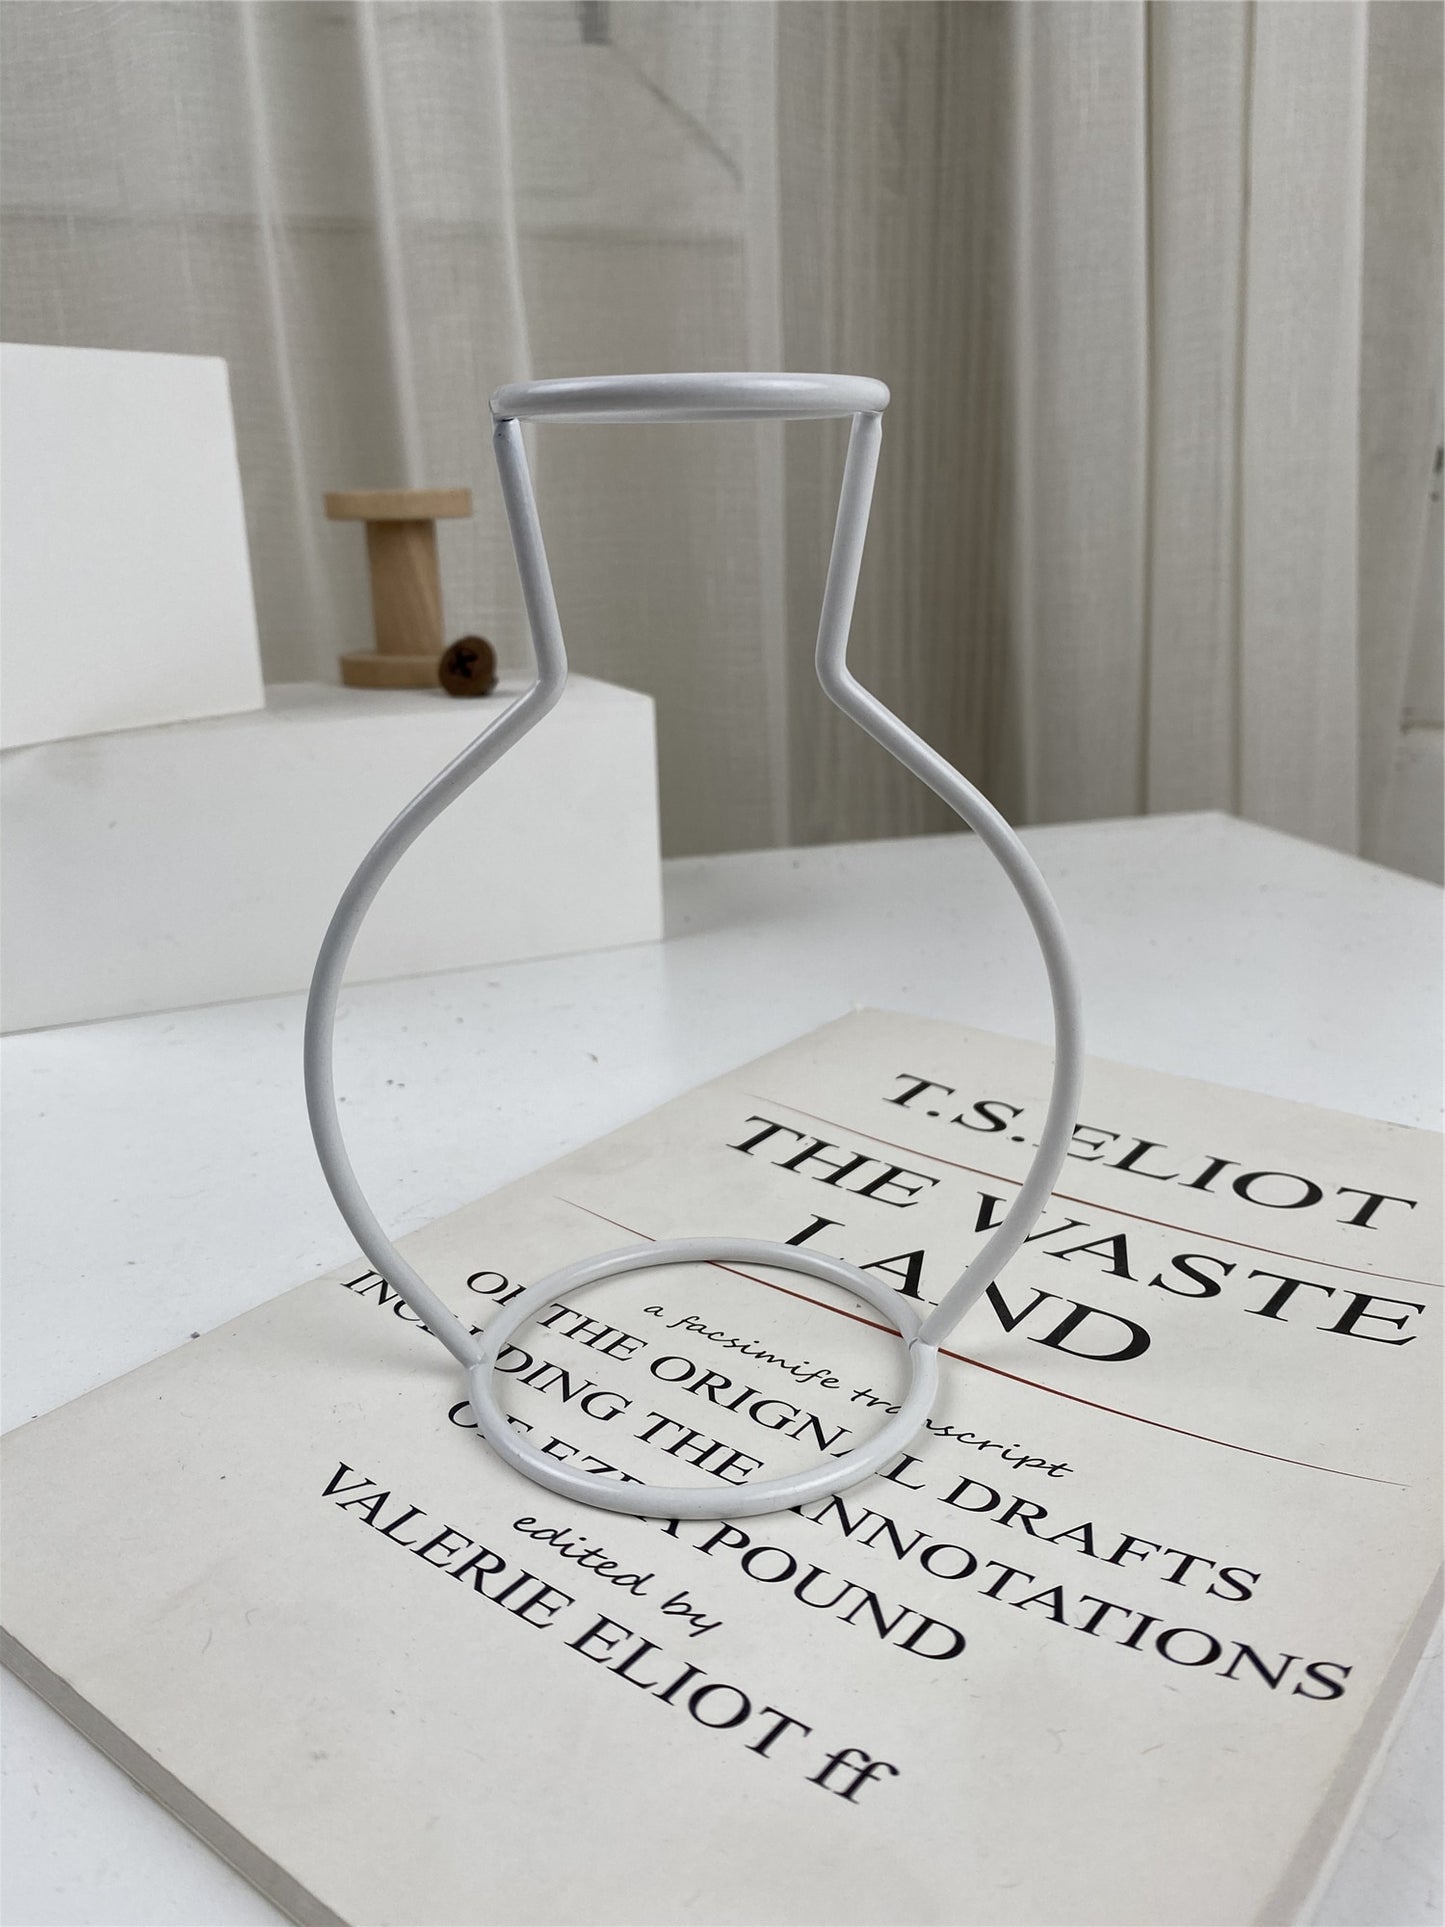 Retro Nordic Style Metal Vase-Shaped Plant Holder with Glass Vase